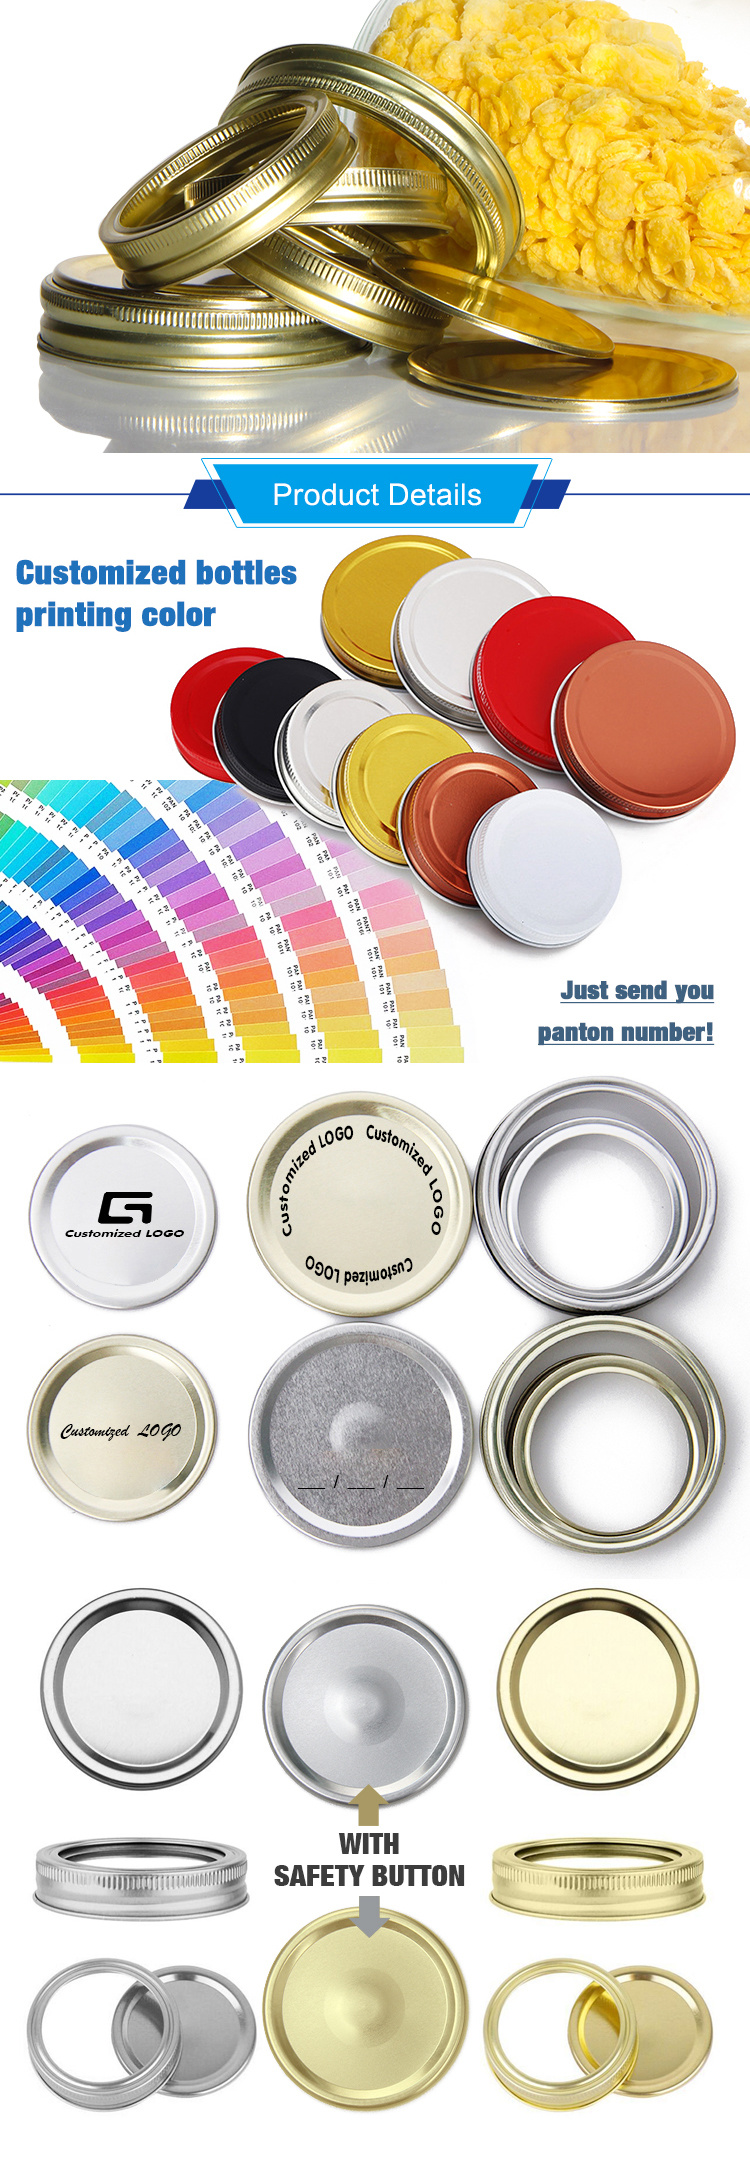 Customized Shape 70mm 86mm Bulk Regular Silver Tinplate Lug Caps for Home Canning